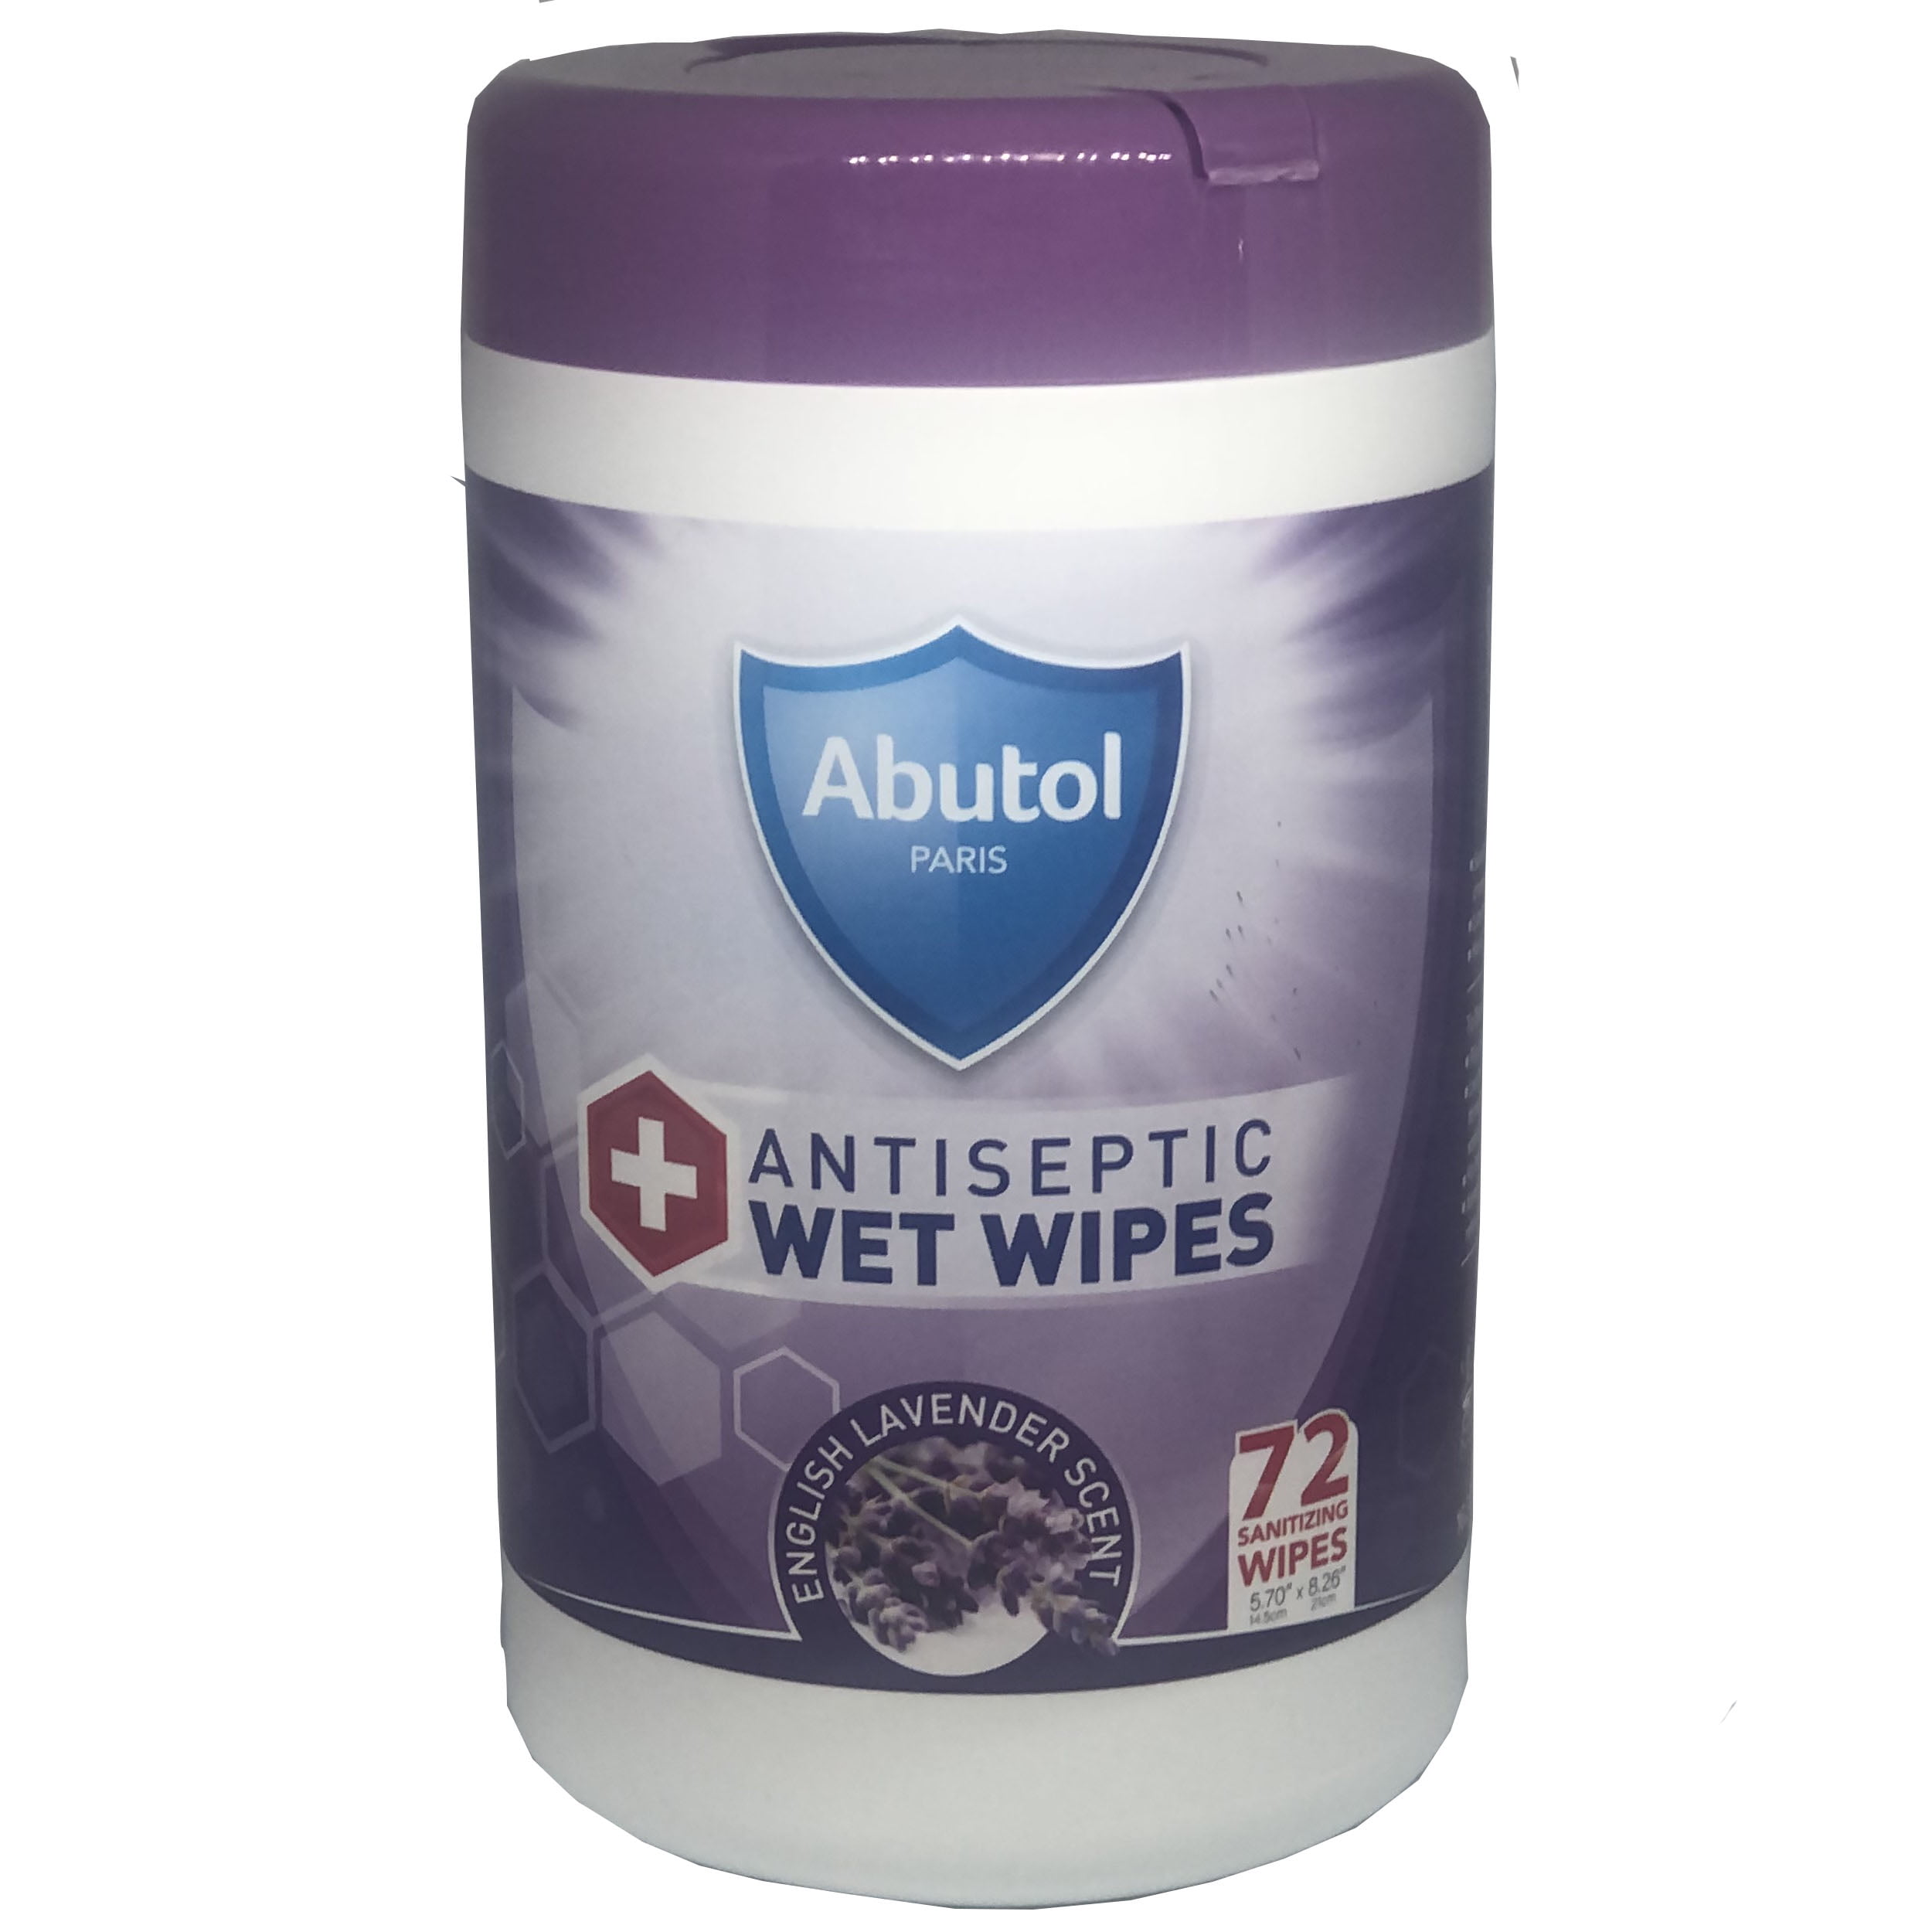 Abutol Paris Antiseptic Wet Sanitizing